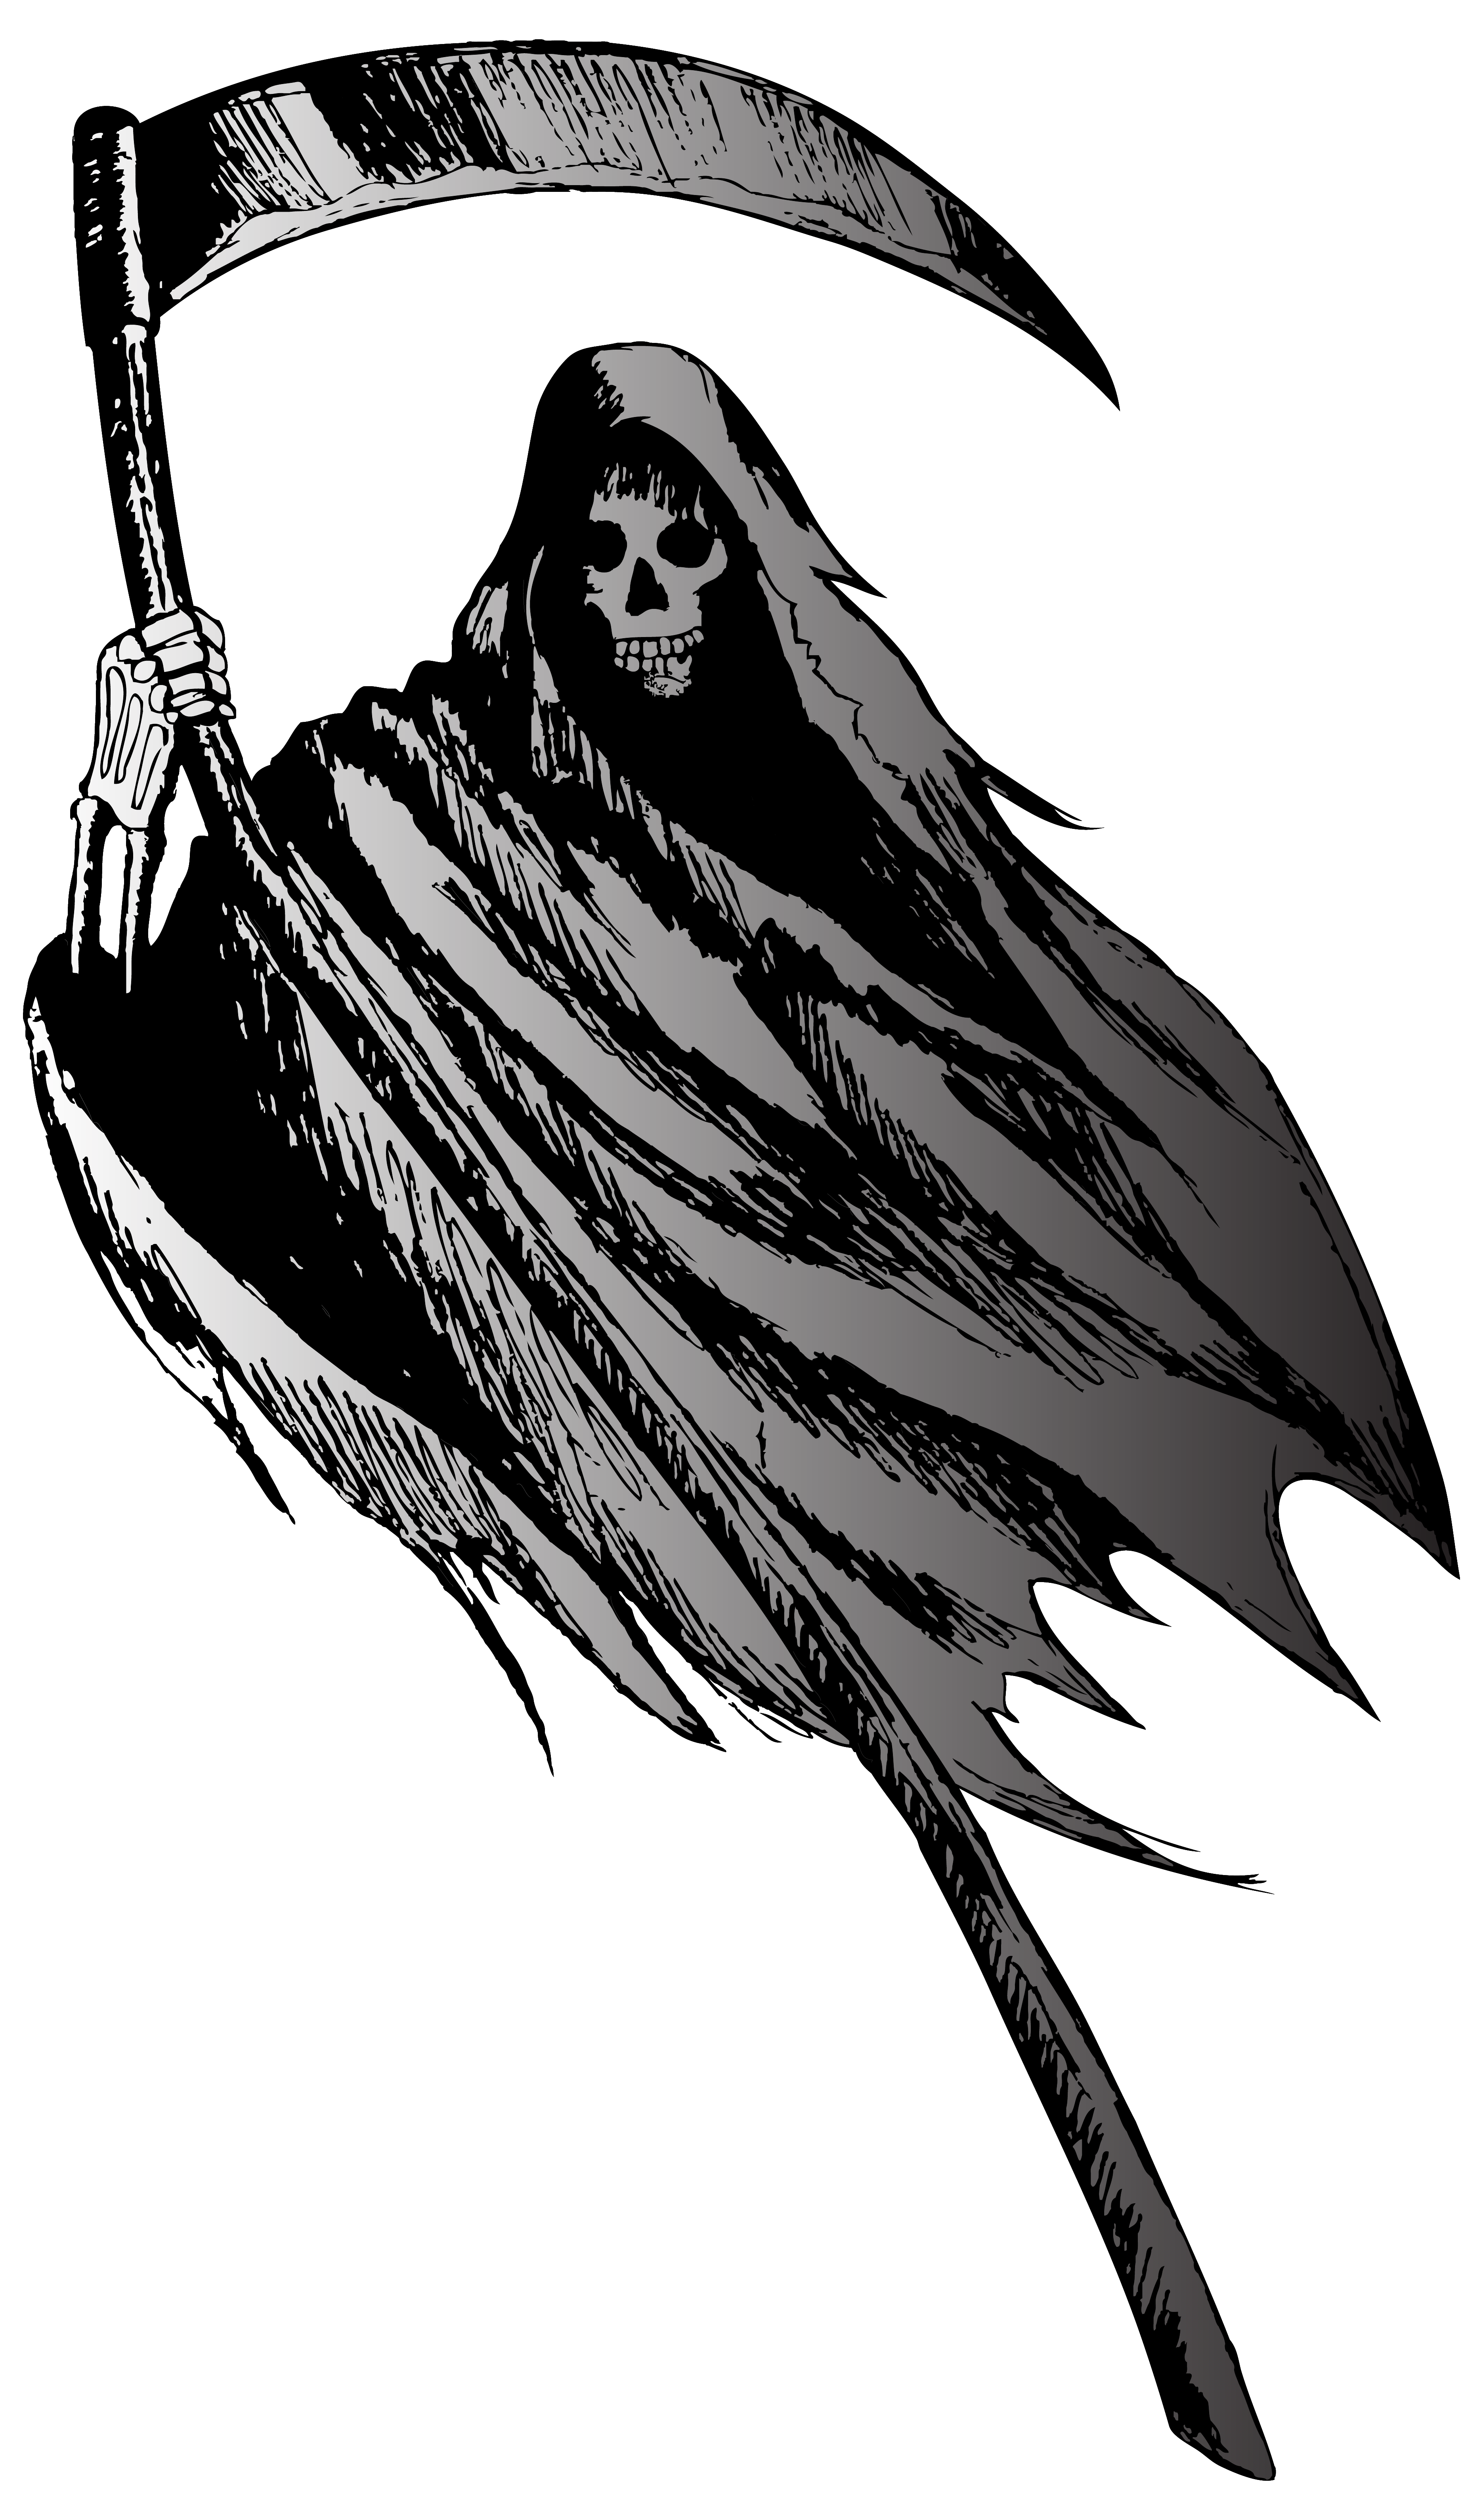 Grim reaper clipart work, Grim reaper work Transparent FREE for